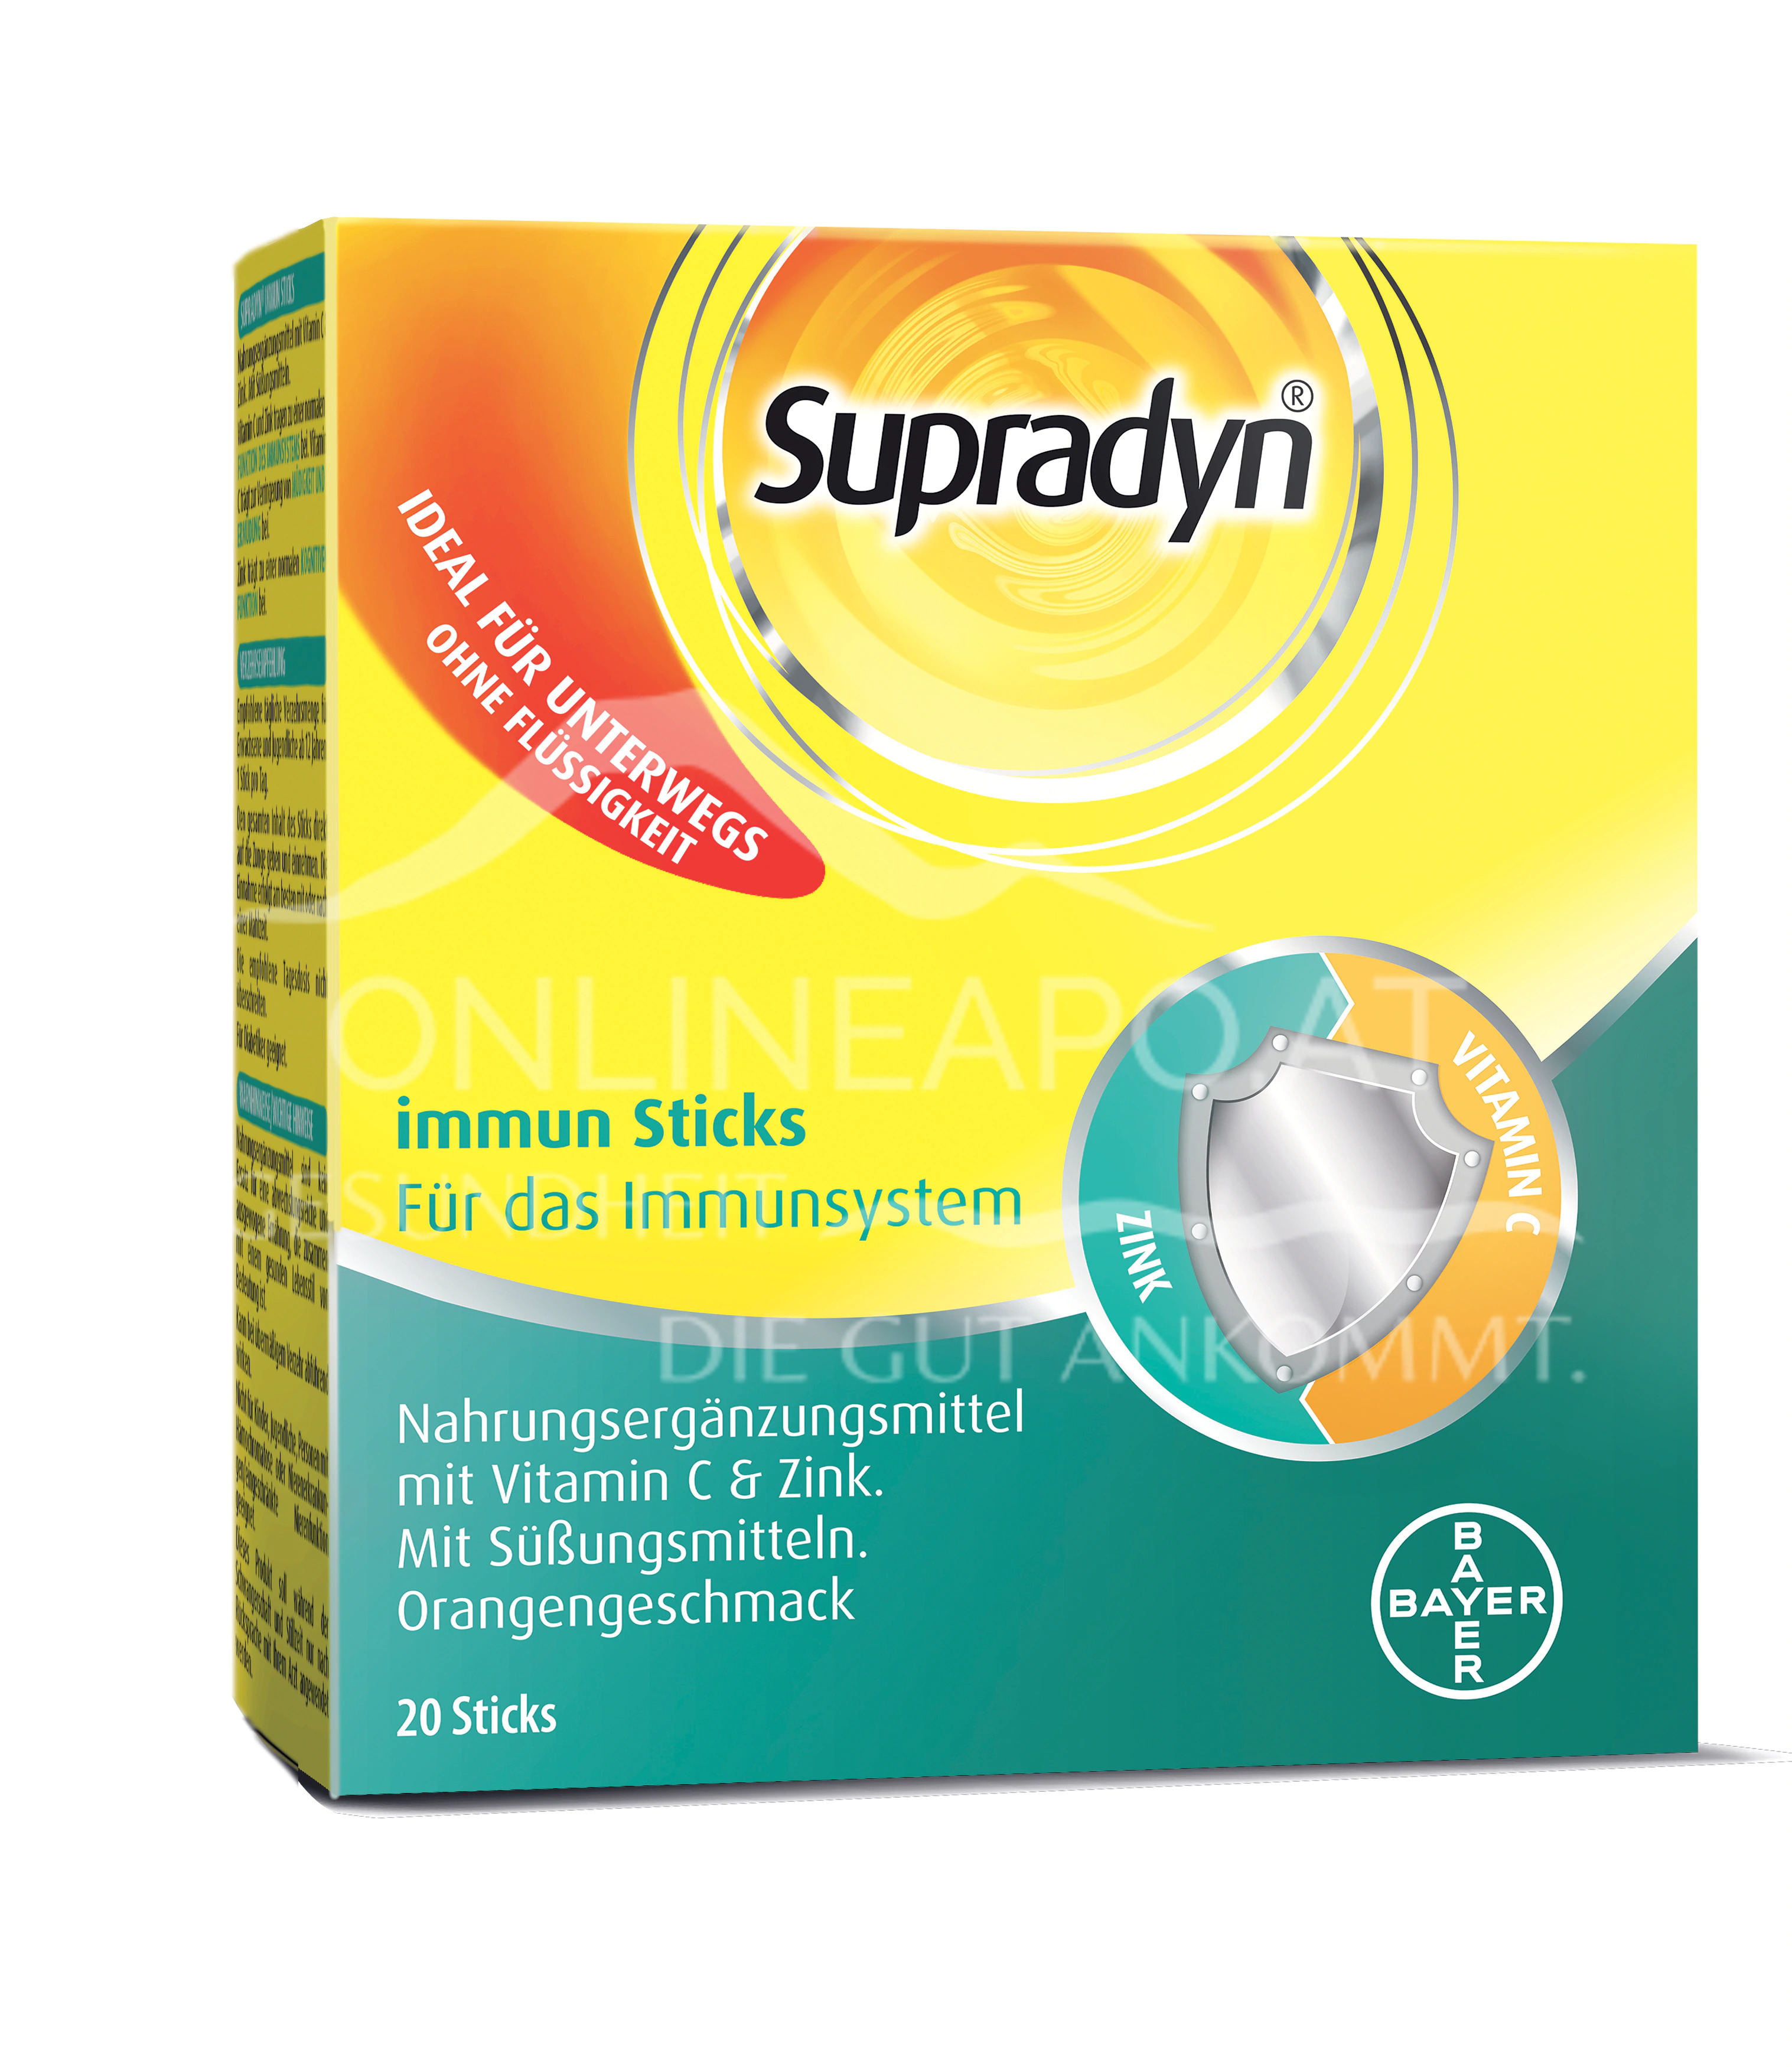 Supradyn® immun Sticks